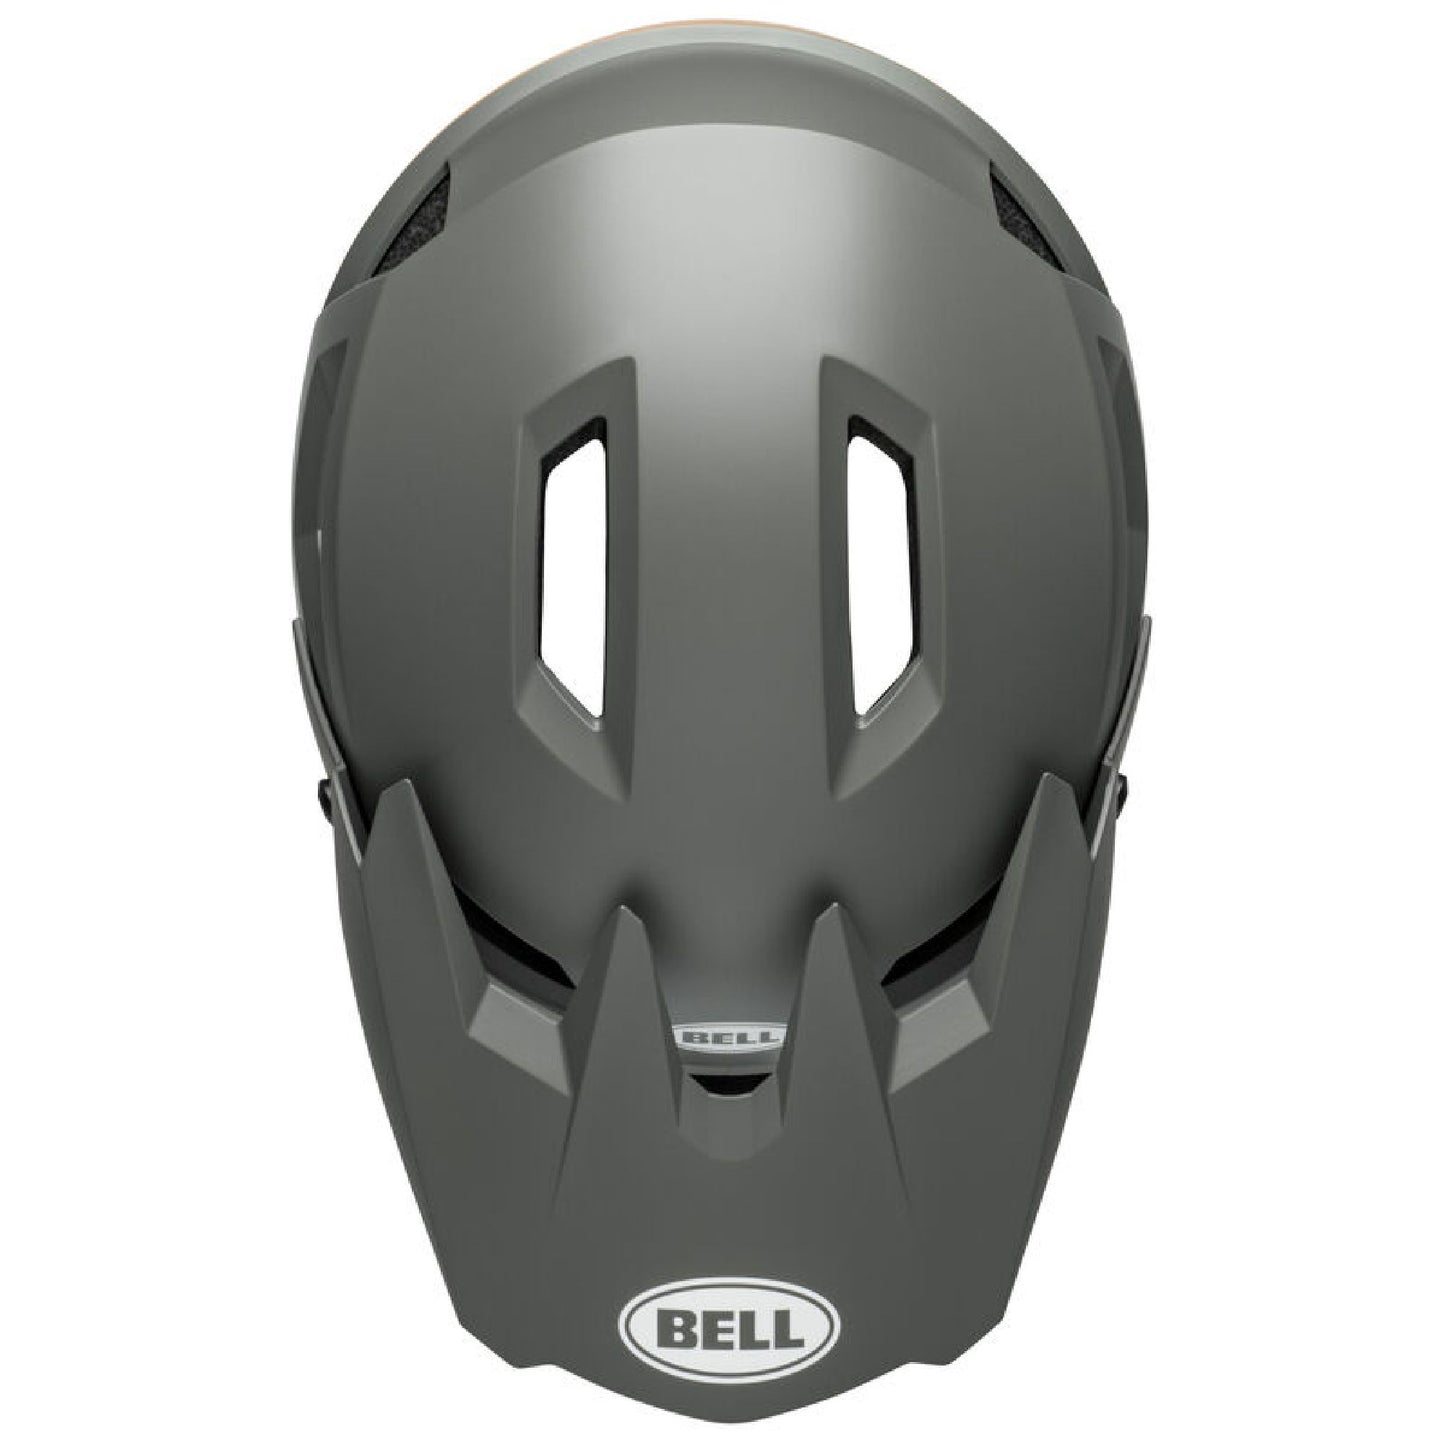 Bell Sanction 2 DLX MIPS Helmet Matte Dark Gray Tan Bike Helmets